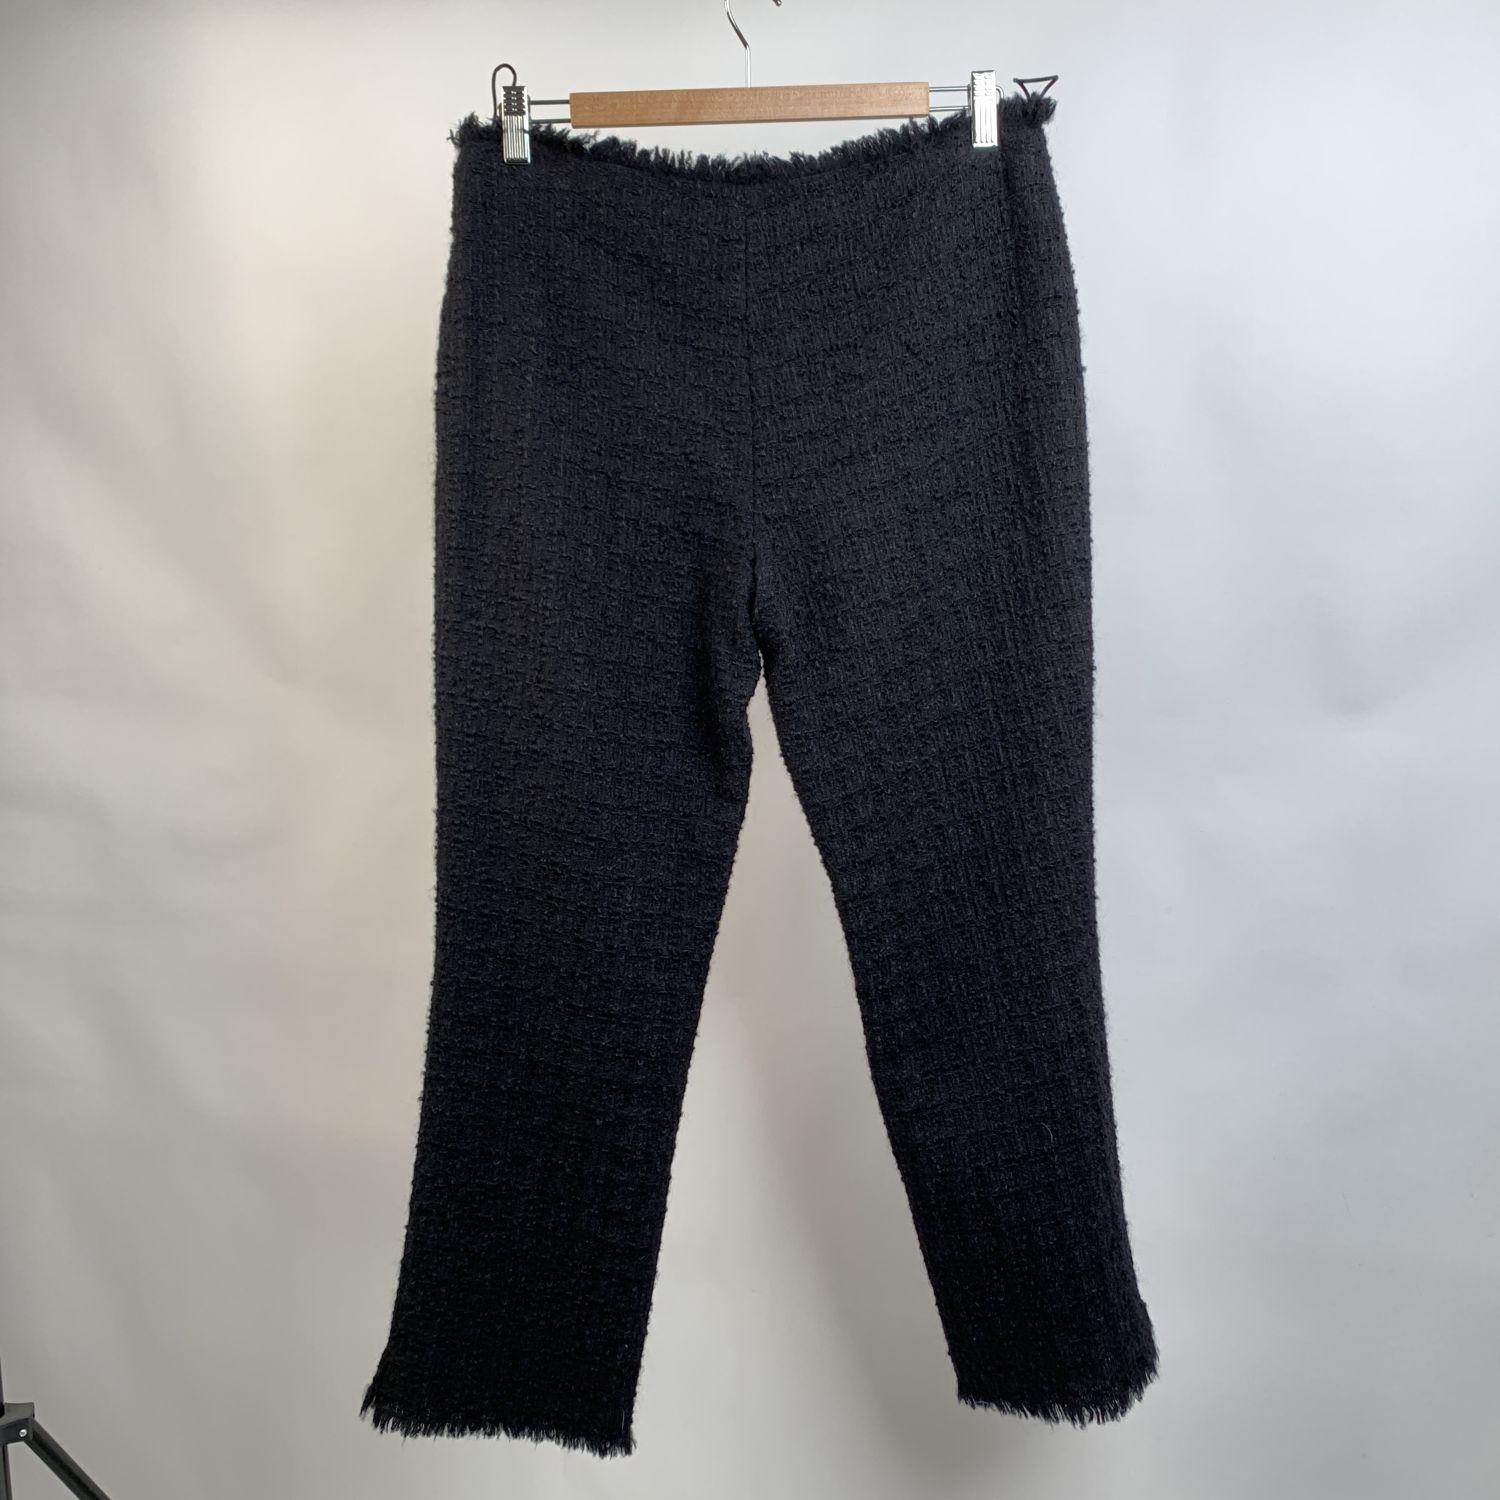 Moschino Cheap and Chic Black Wool Bouclè Trousers Size 44 1